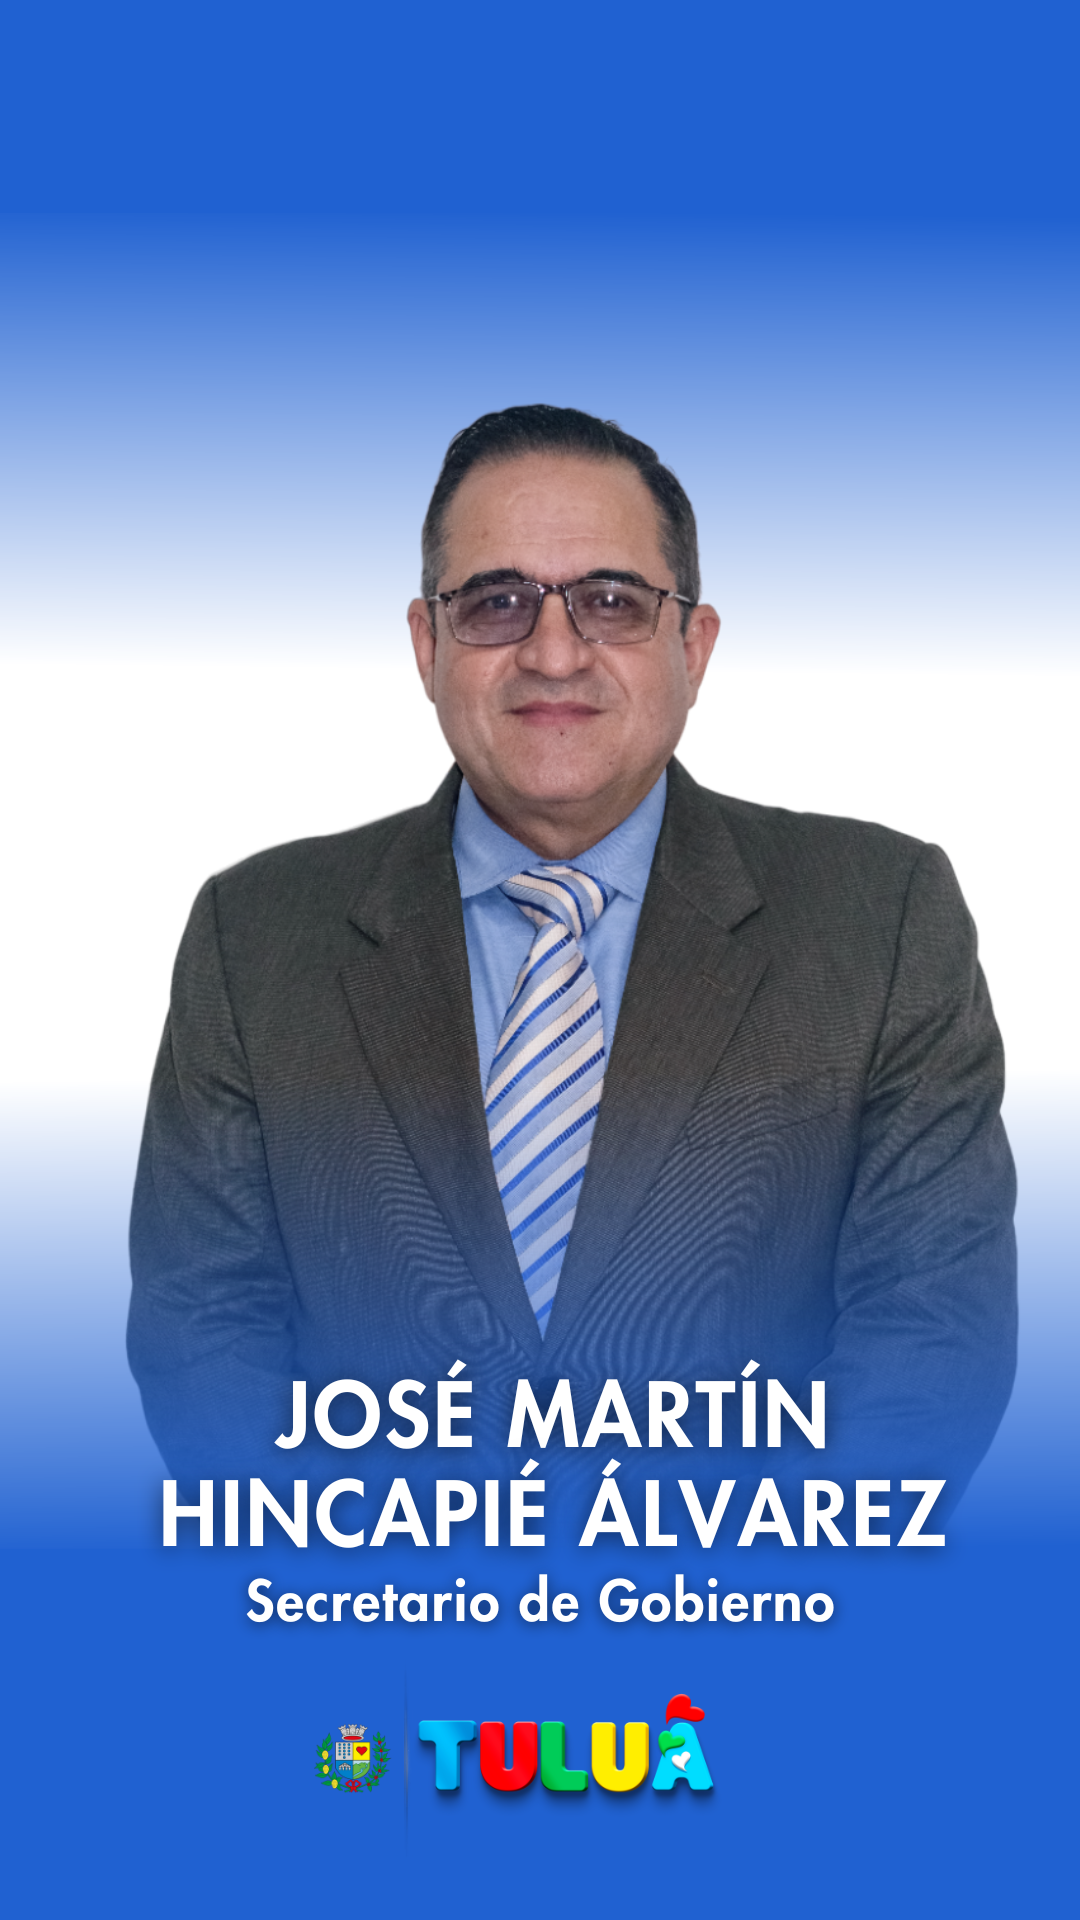 Jose Martin Hincapie Alvarez